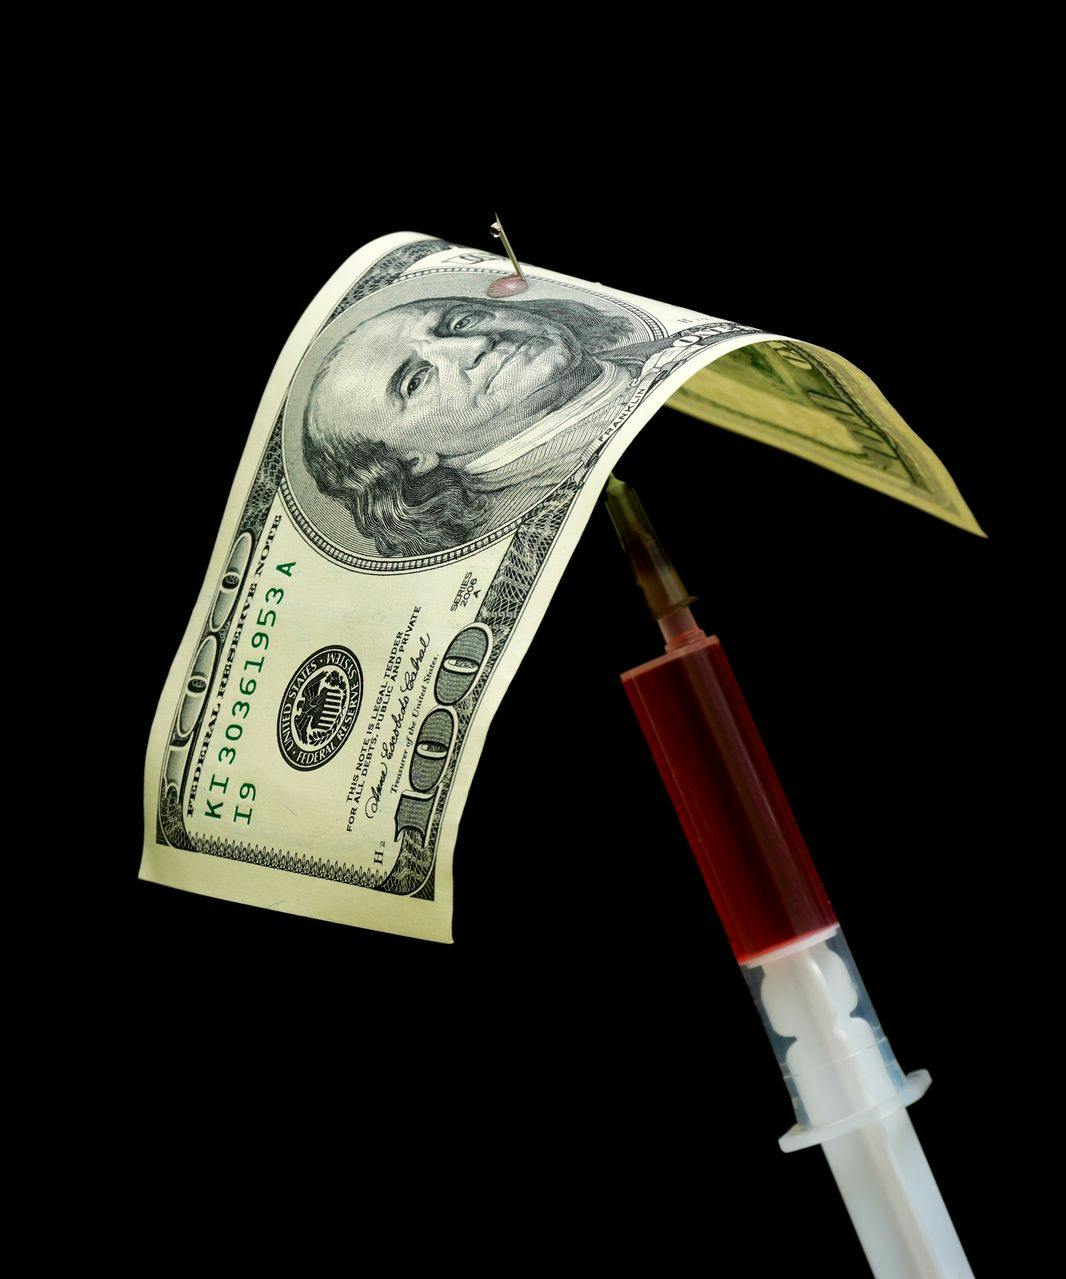 Nonprofit Payer Says It Saved $1.7 Million Through Use of Infliximab Biosimilars 